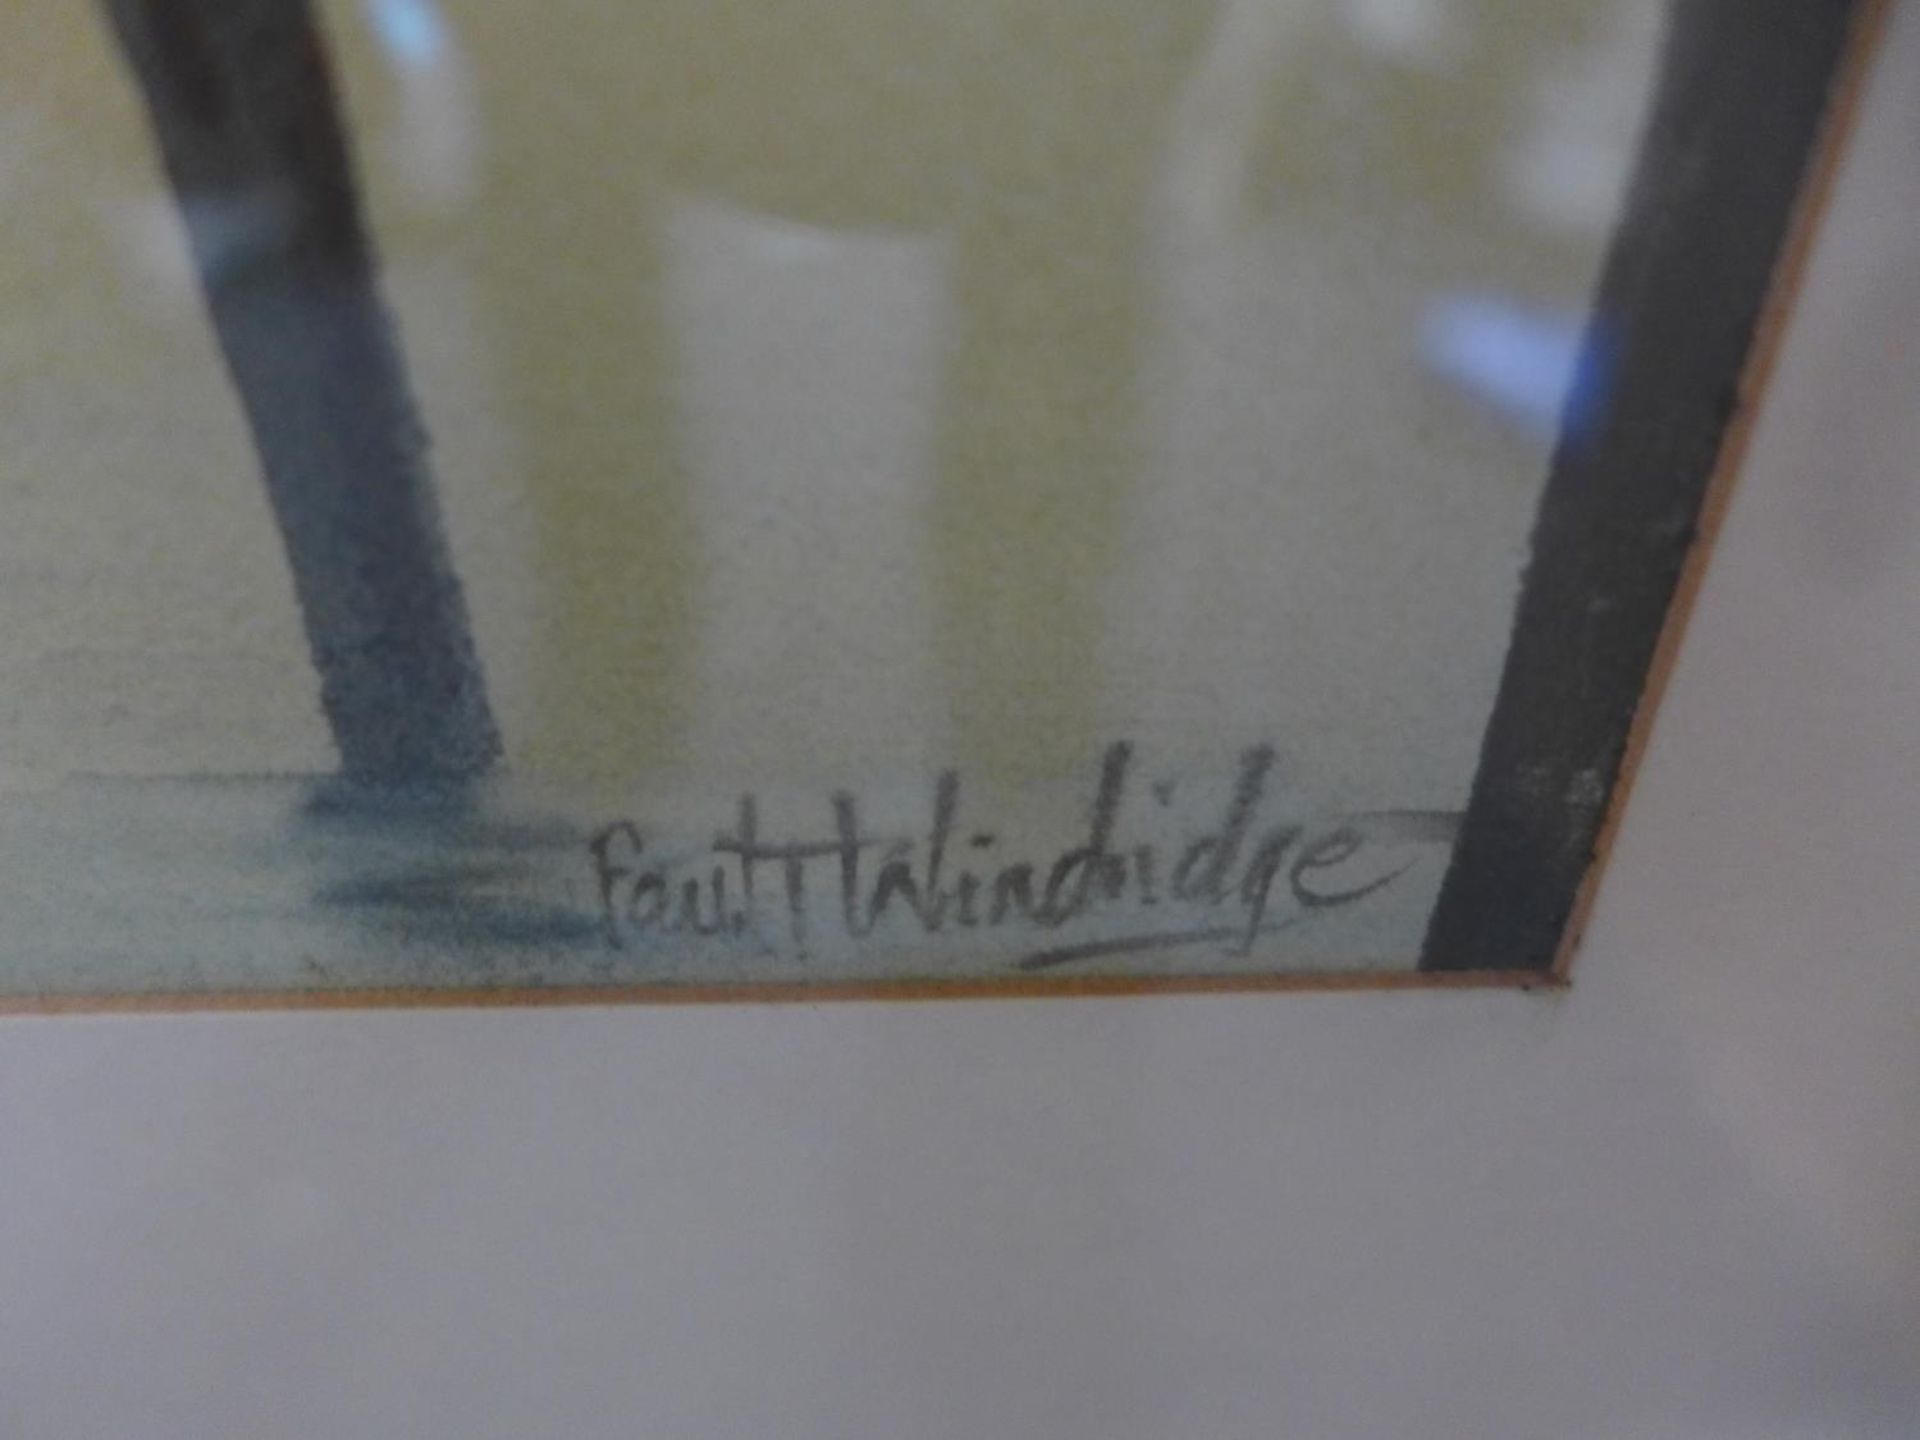 PAUL WINDBRIDGE (BRITISH, 20TH/21ST CENTURY) LAKE SCENE WITH BIRDS, WATERCOLOUR, SIGNED LOWER RIGHT, - Image 2 of 2